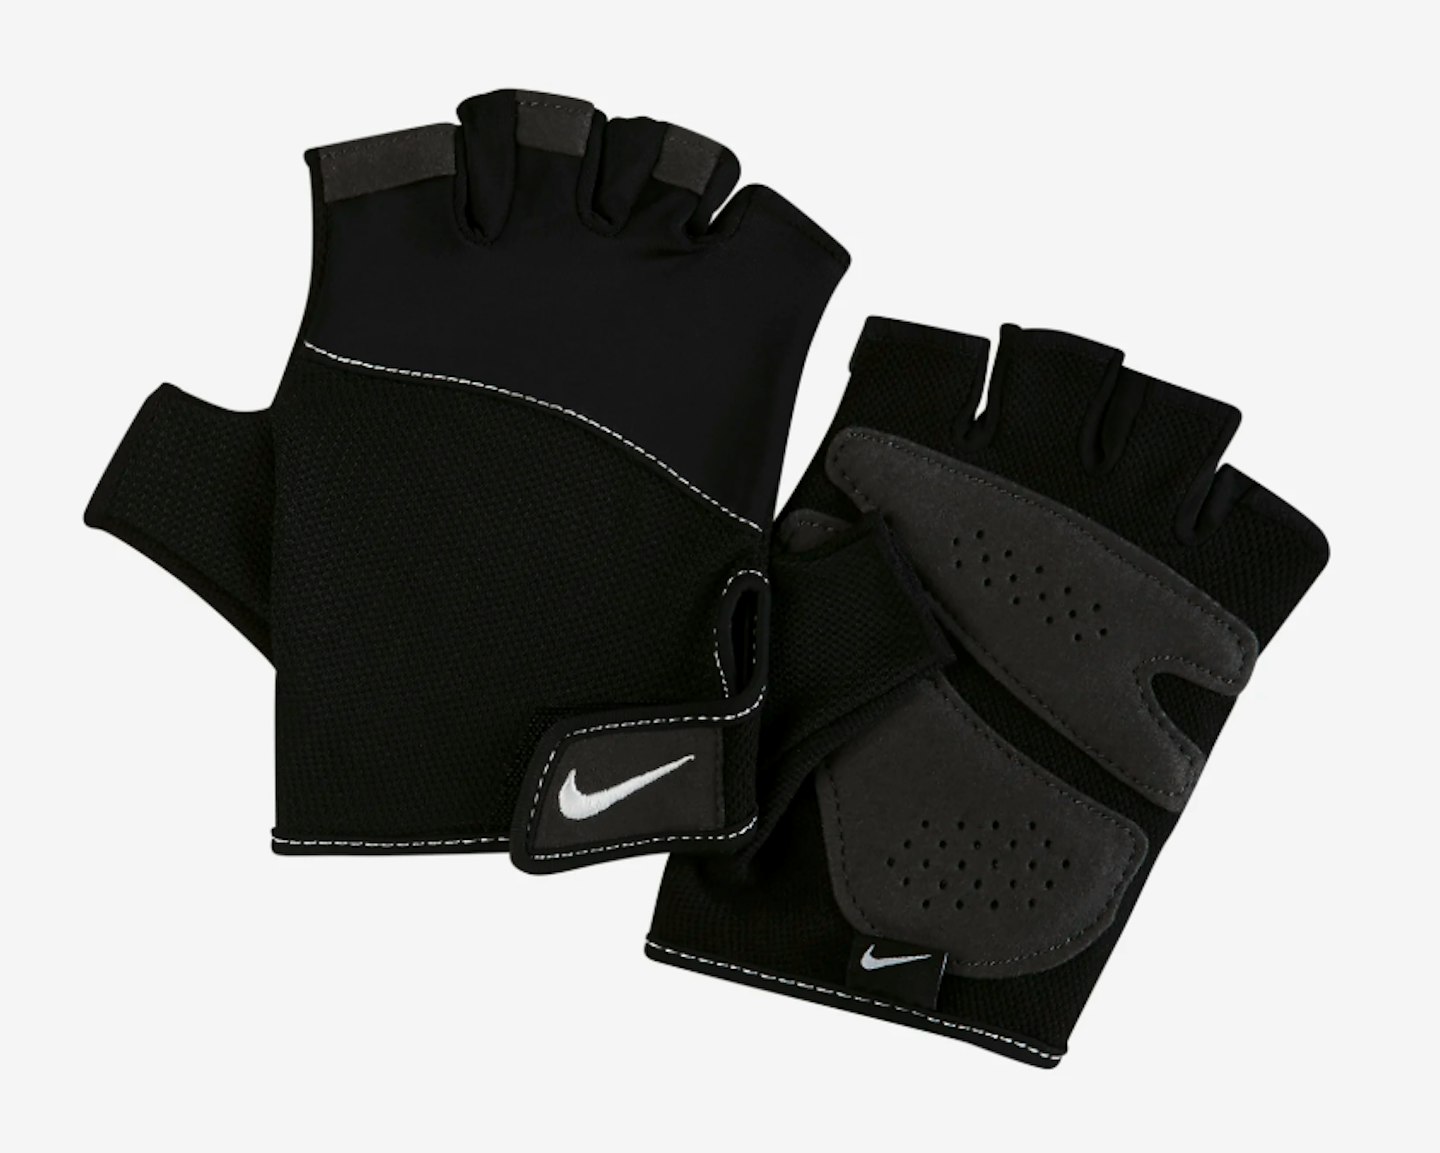 Nike Training Gloves, £15.95